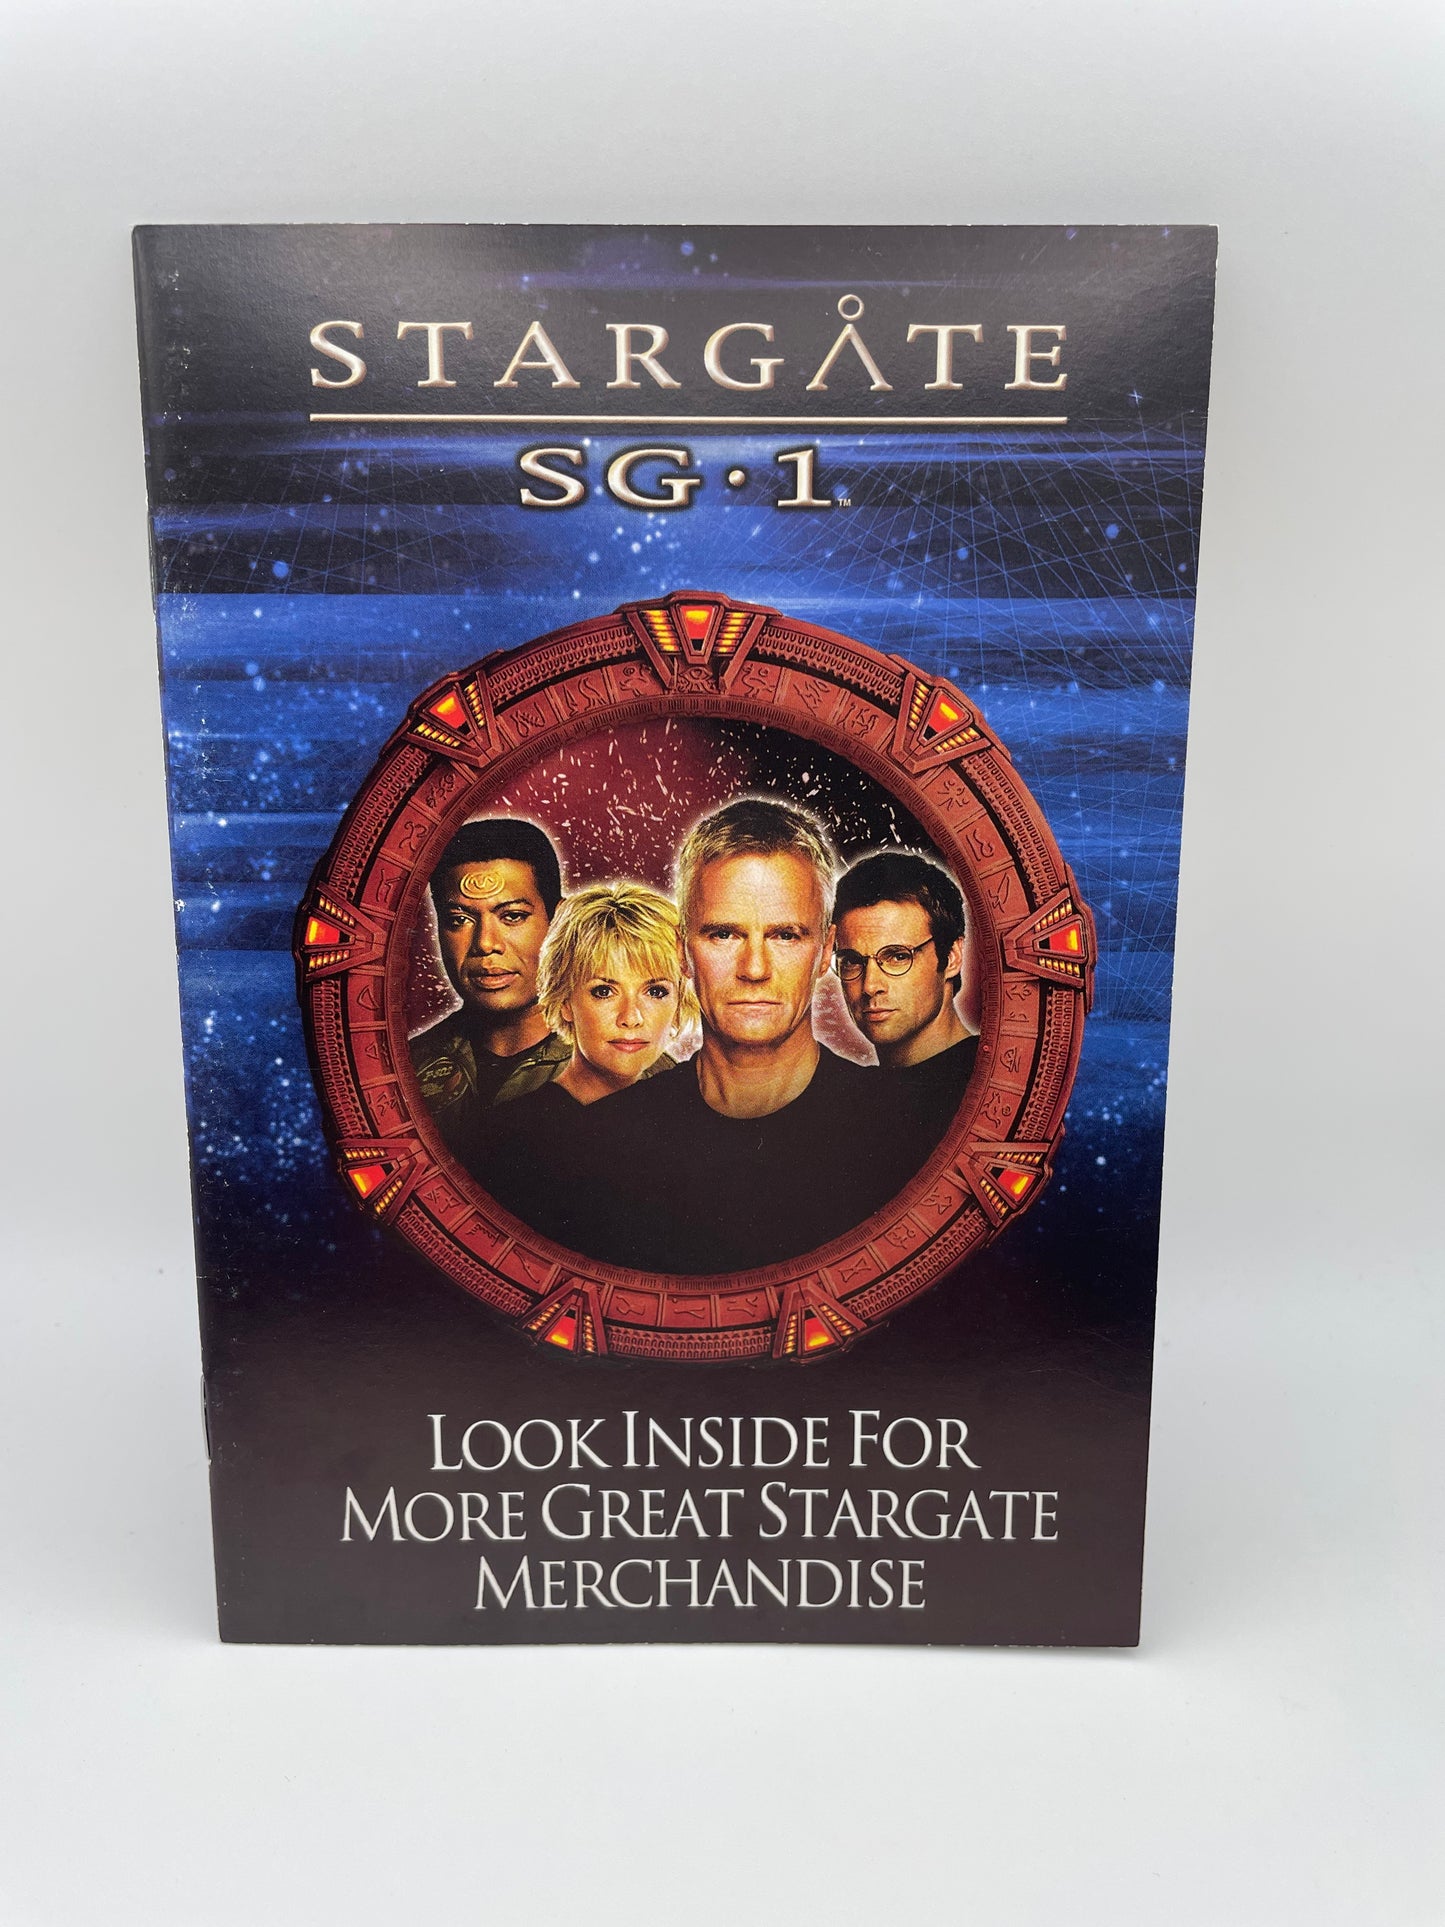 Dvd - Stargate SG1 - Season 5 Set 2001 #100618